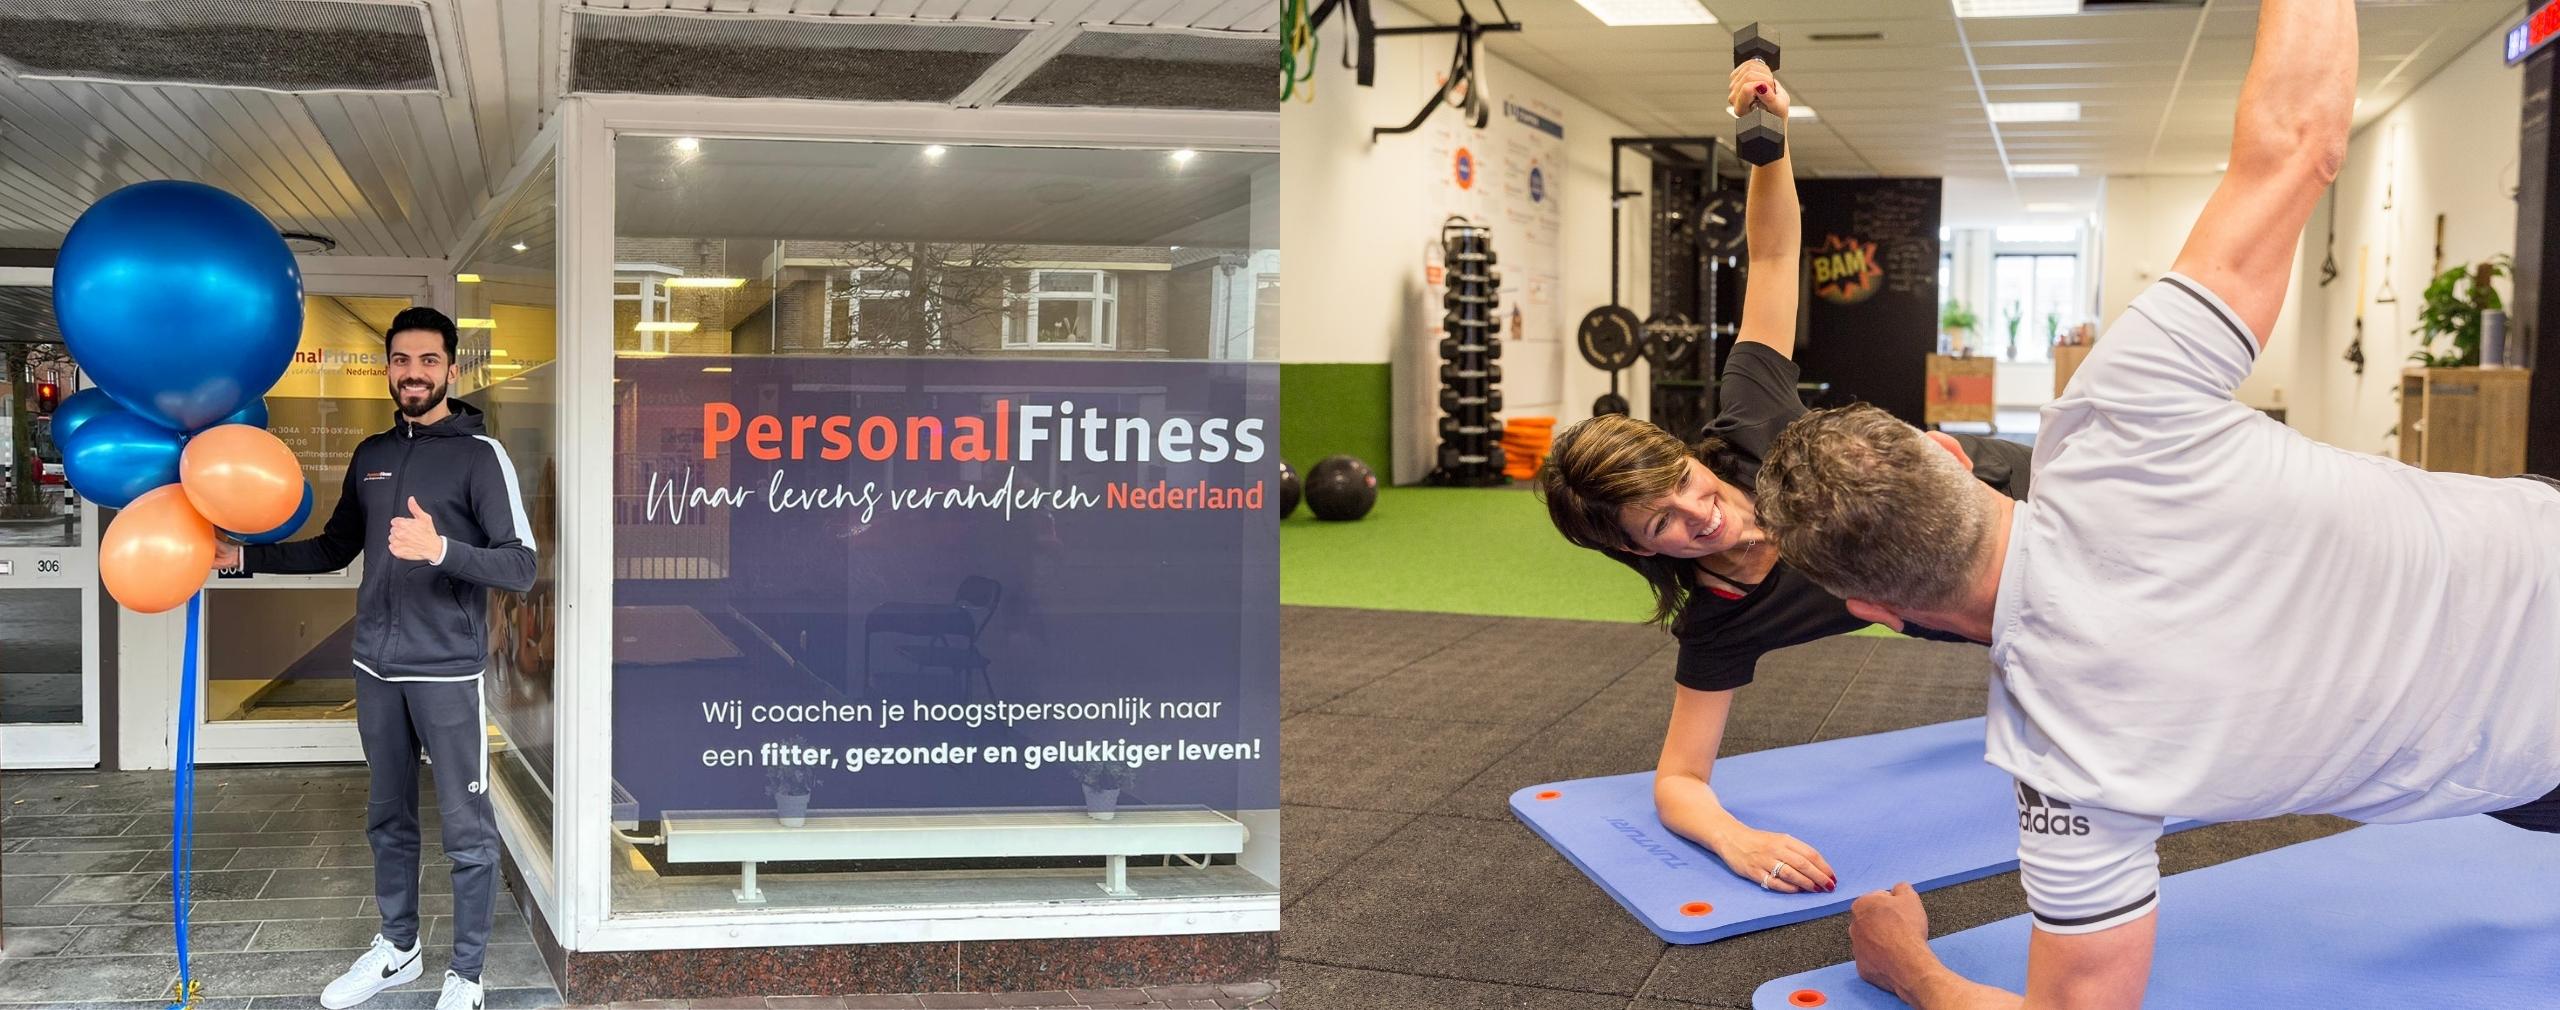 Personal Fitness Nederland Zeist